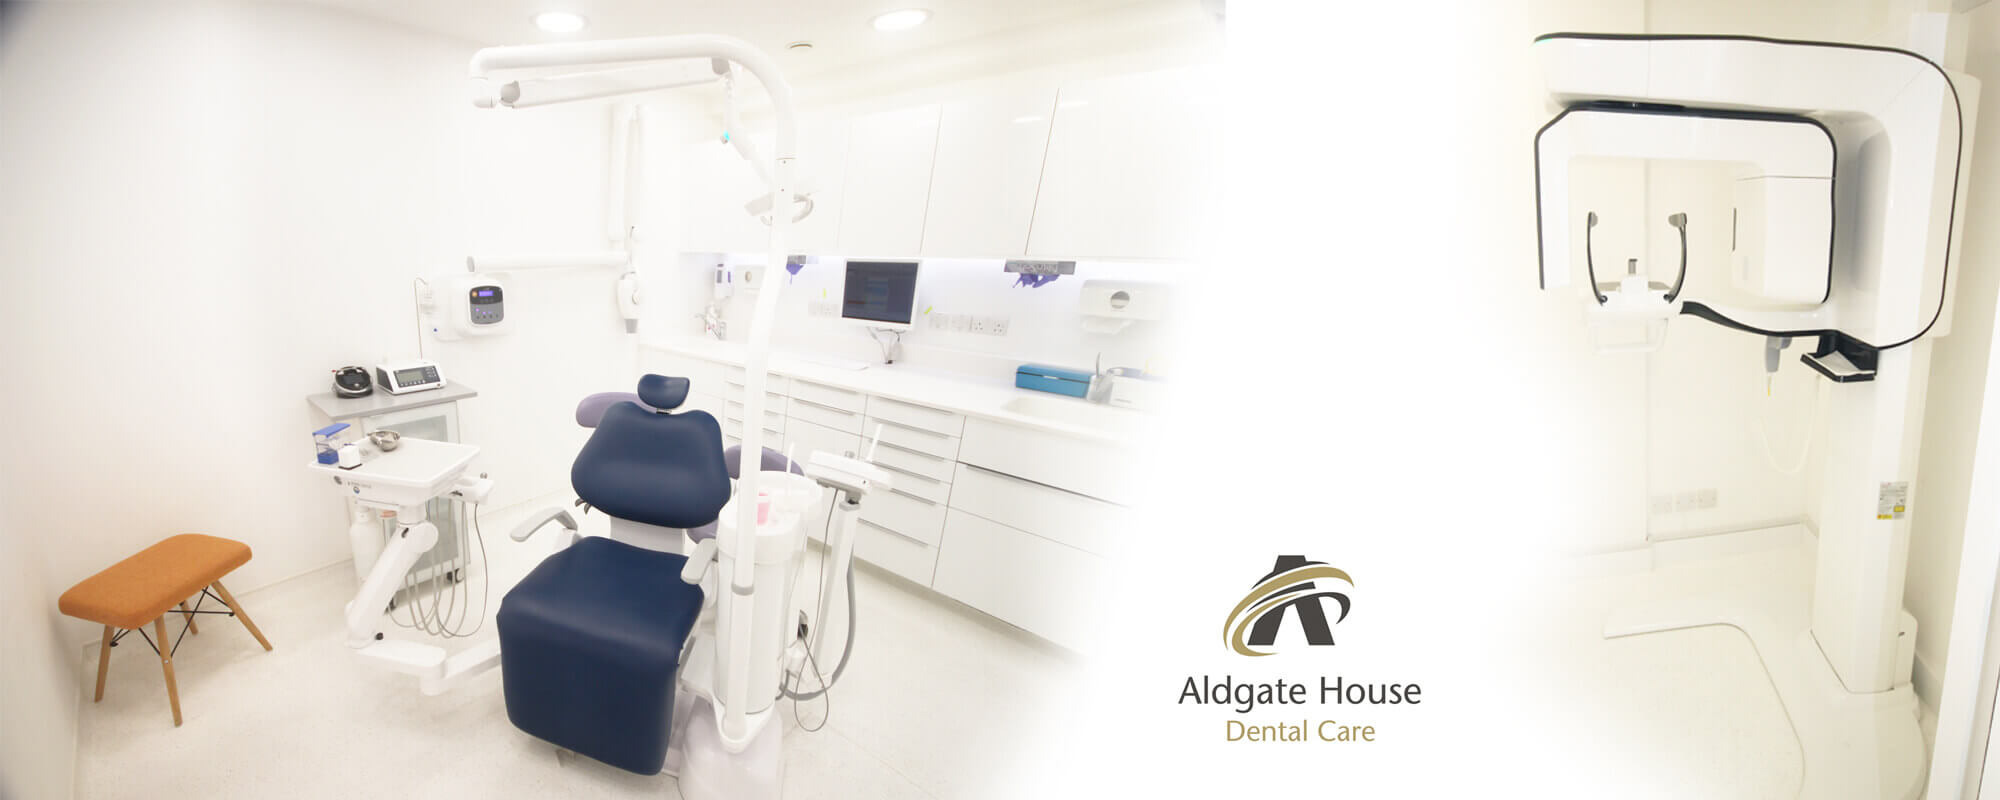 Aldgate House Dental care in London